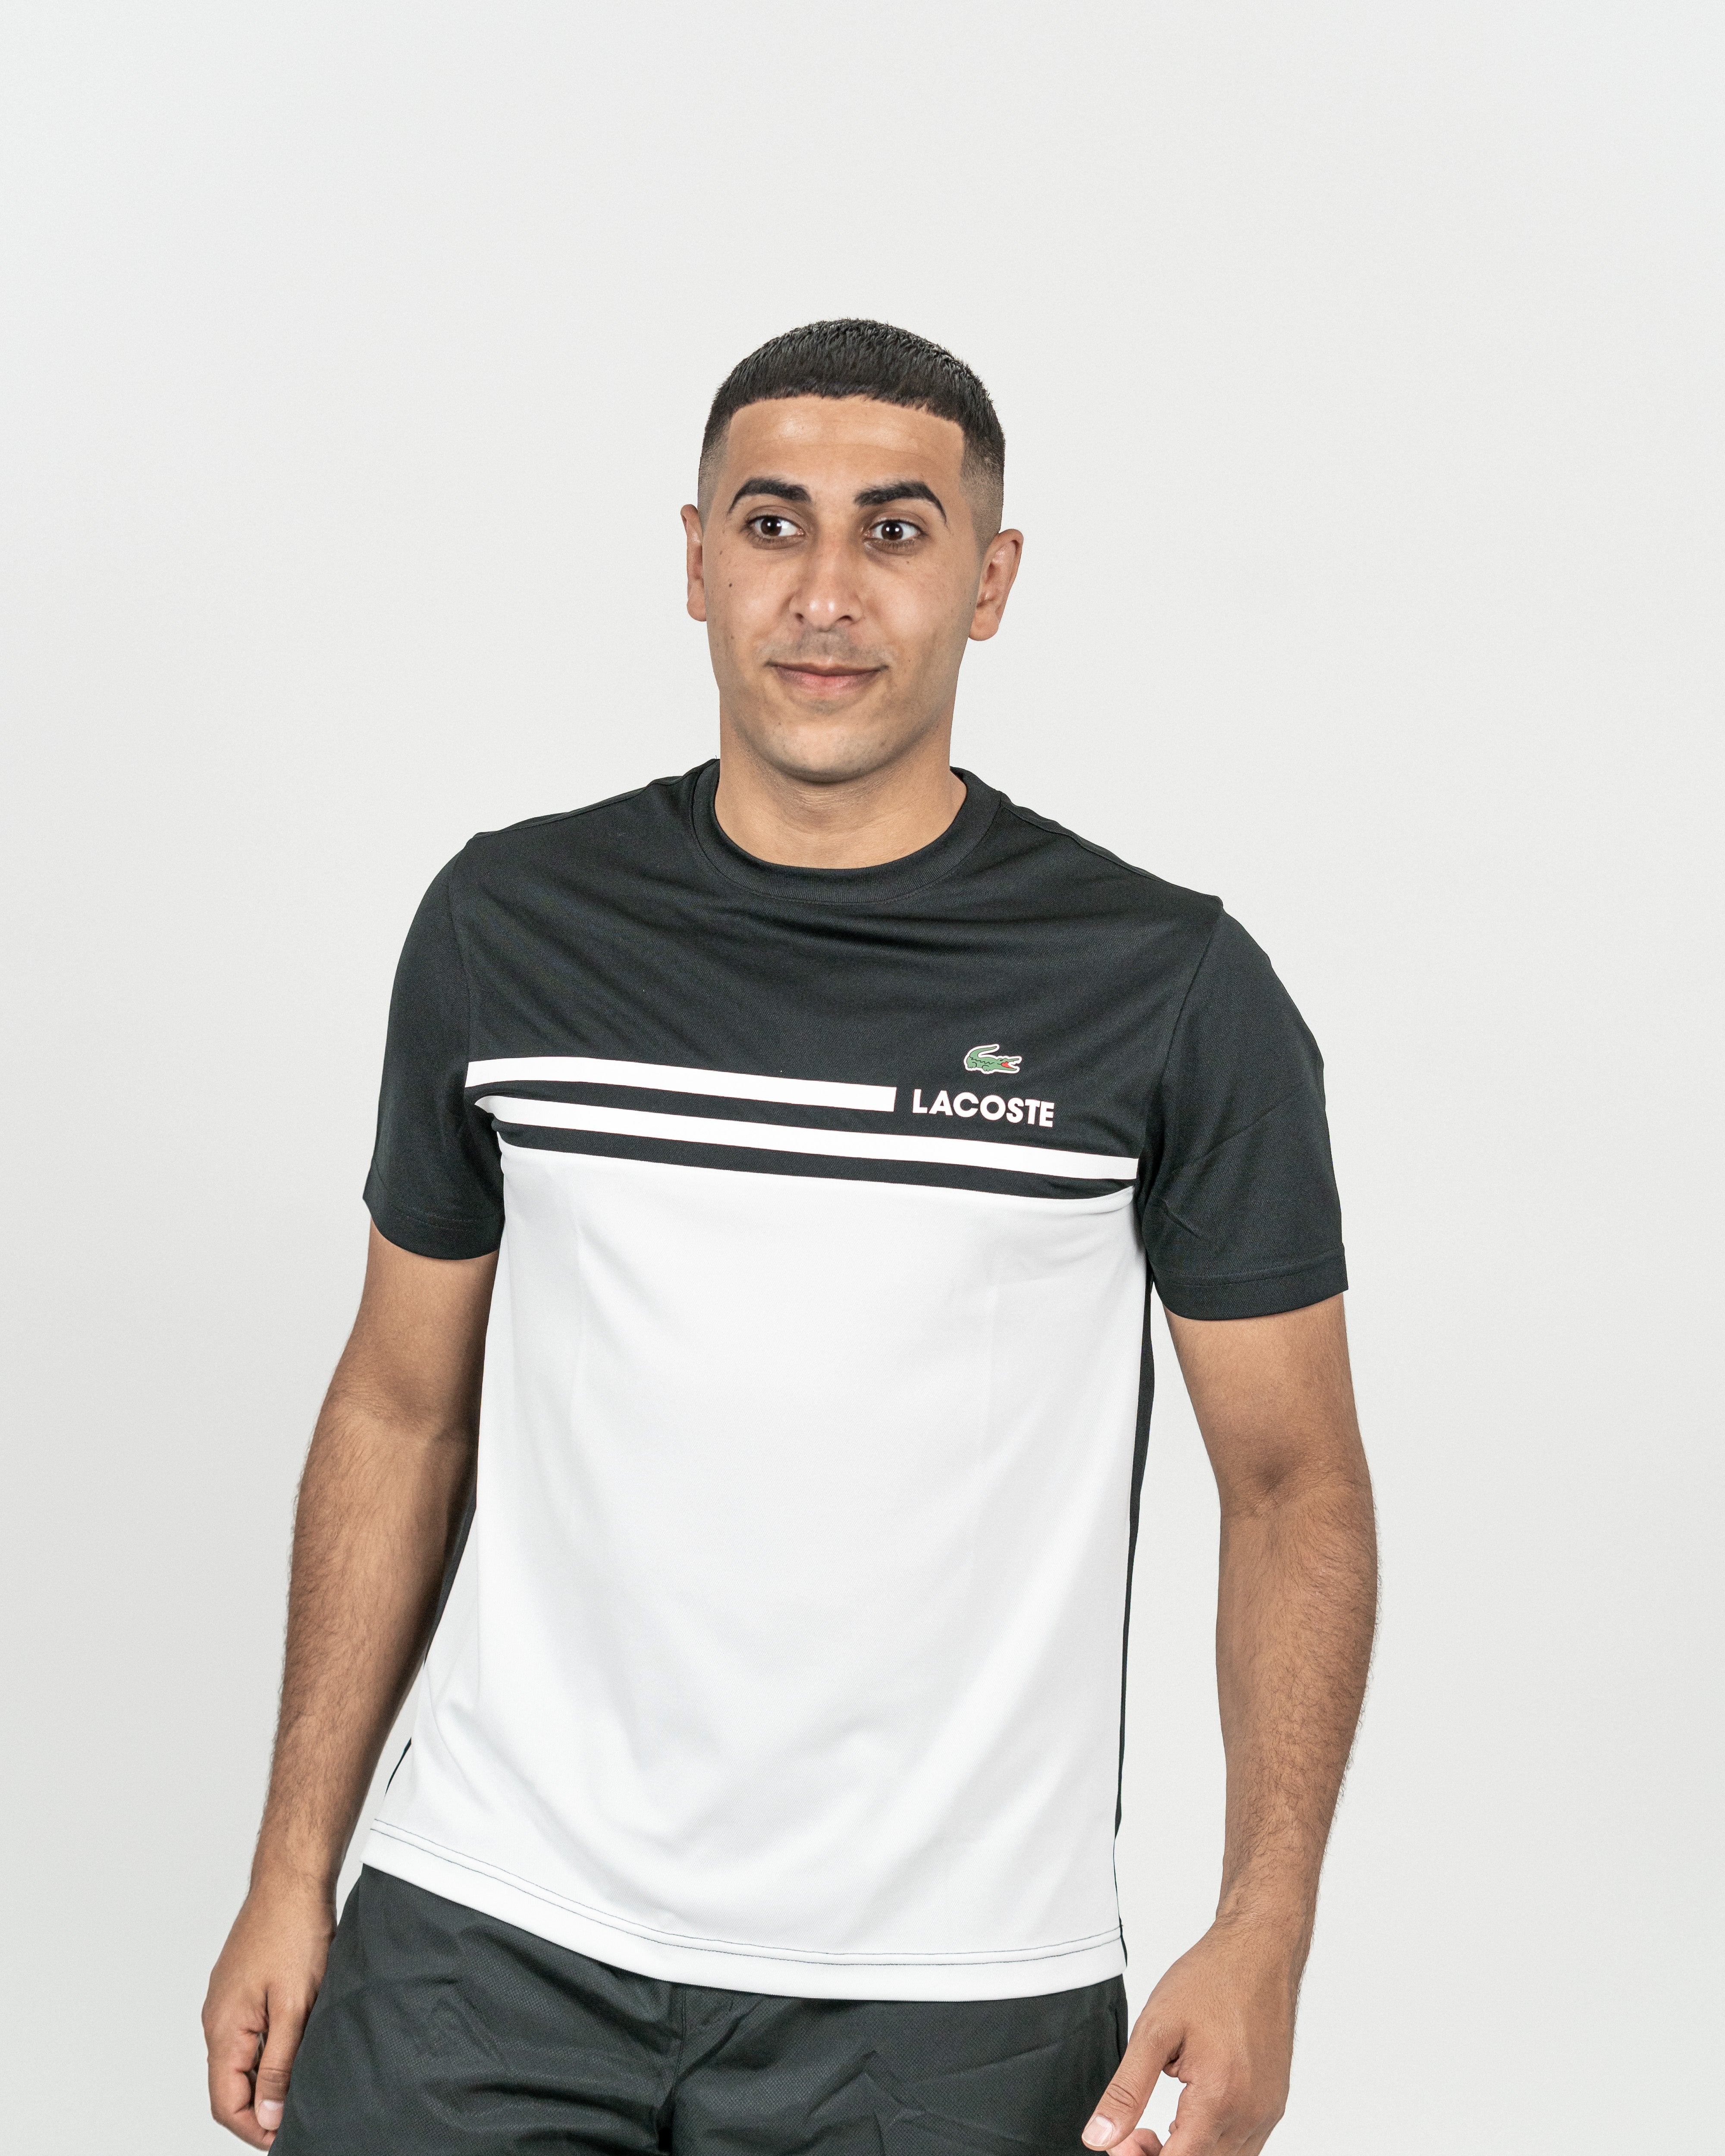 klar undulate Udpakning Lacoste Novak Djokovic Tennis T-shirt Sort/Hvid